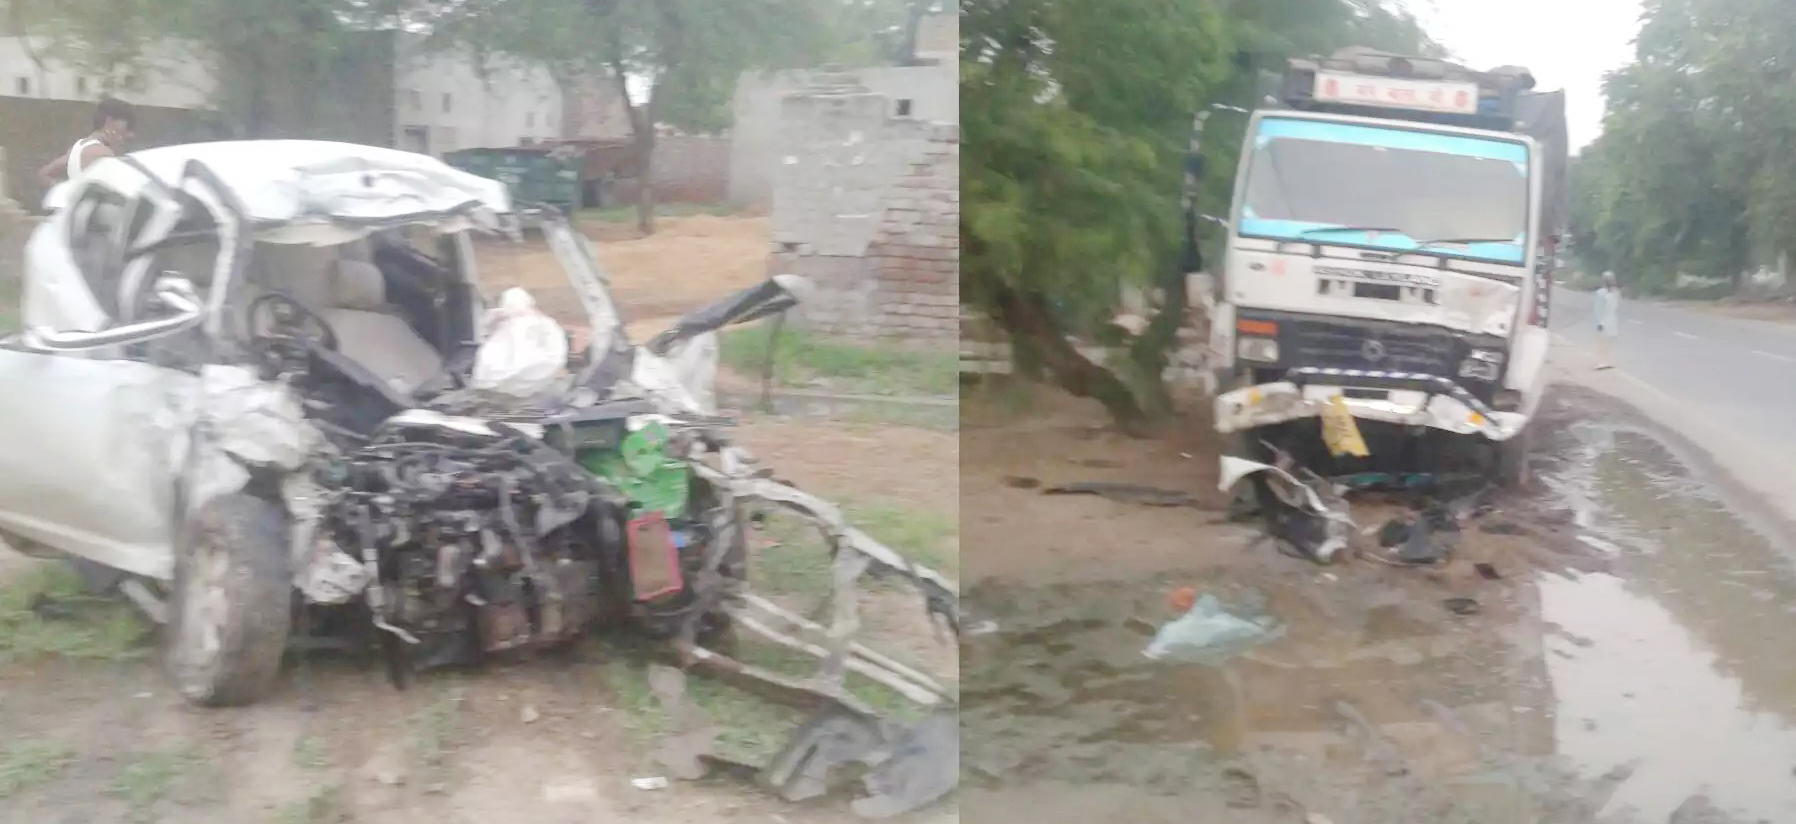 Road Accident, Uncontrolled Car, Death, Animal, Punjab